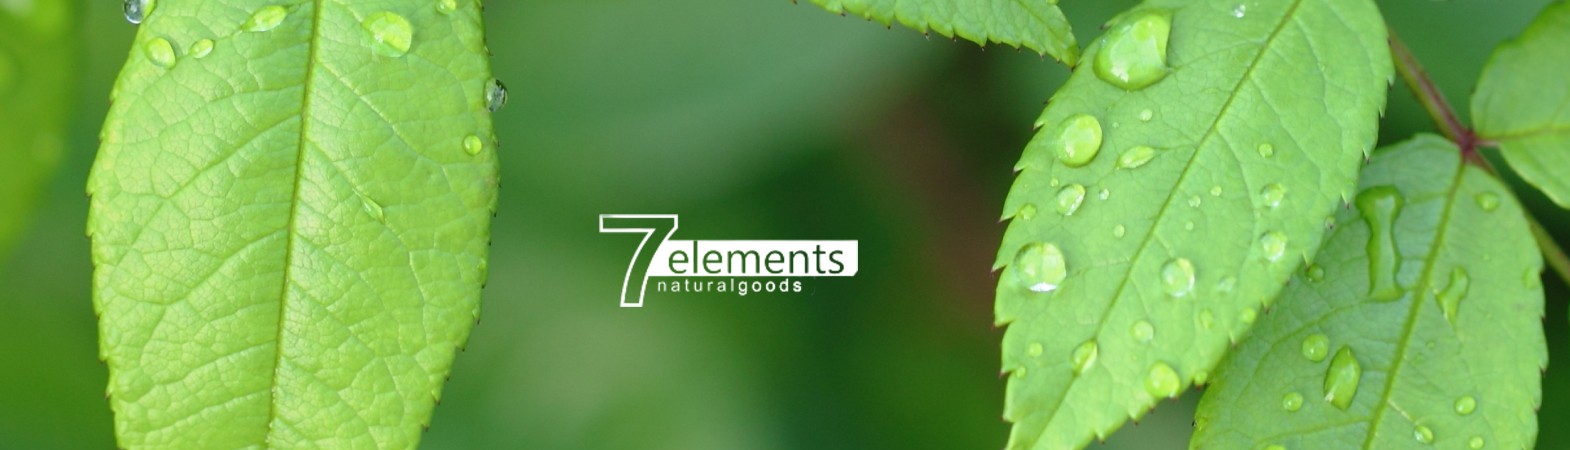 Elements 7